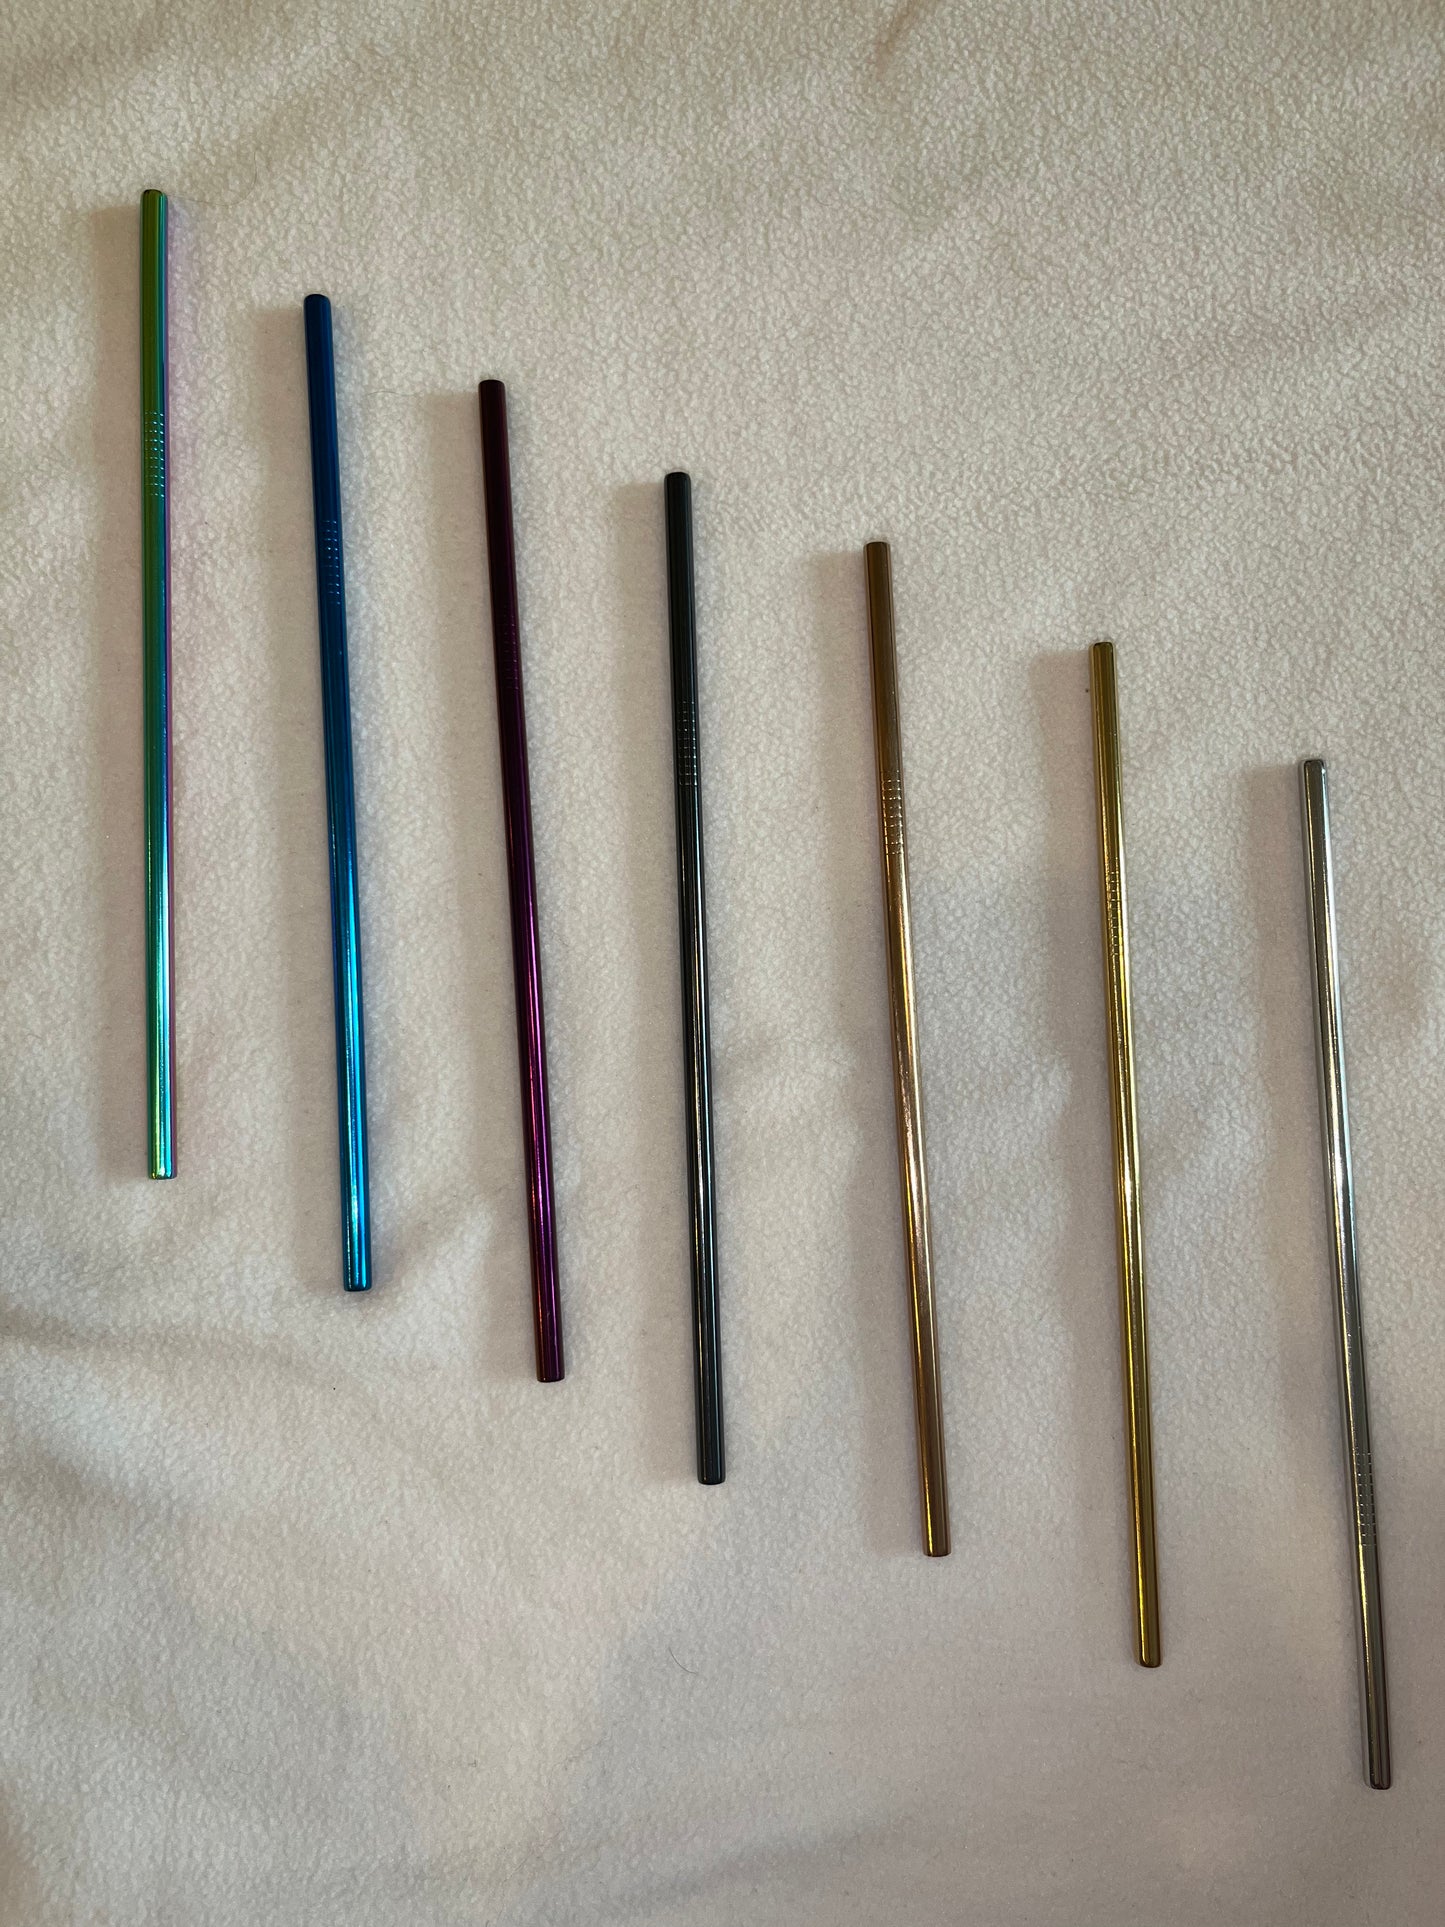 Metal Straws Straight or Bent